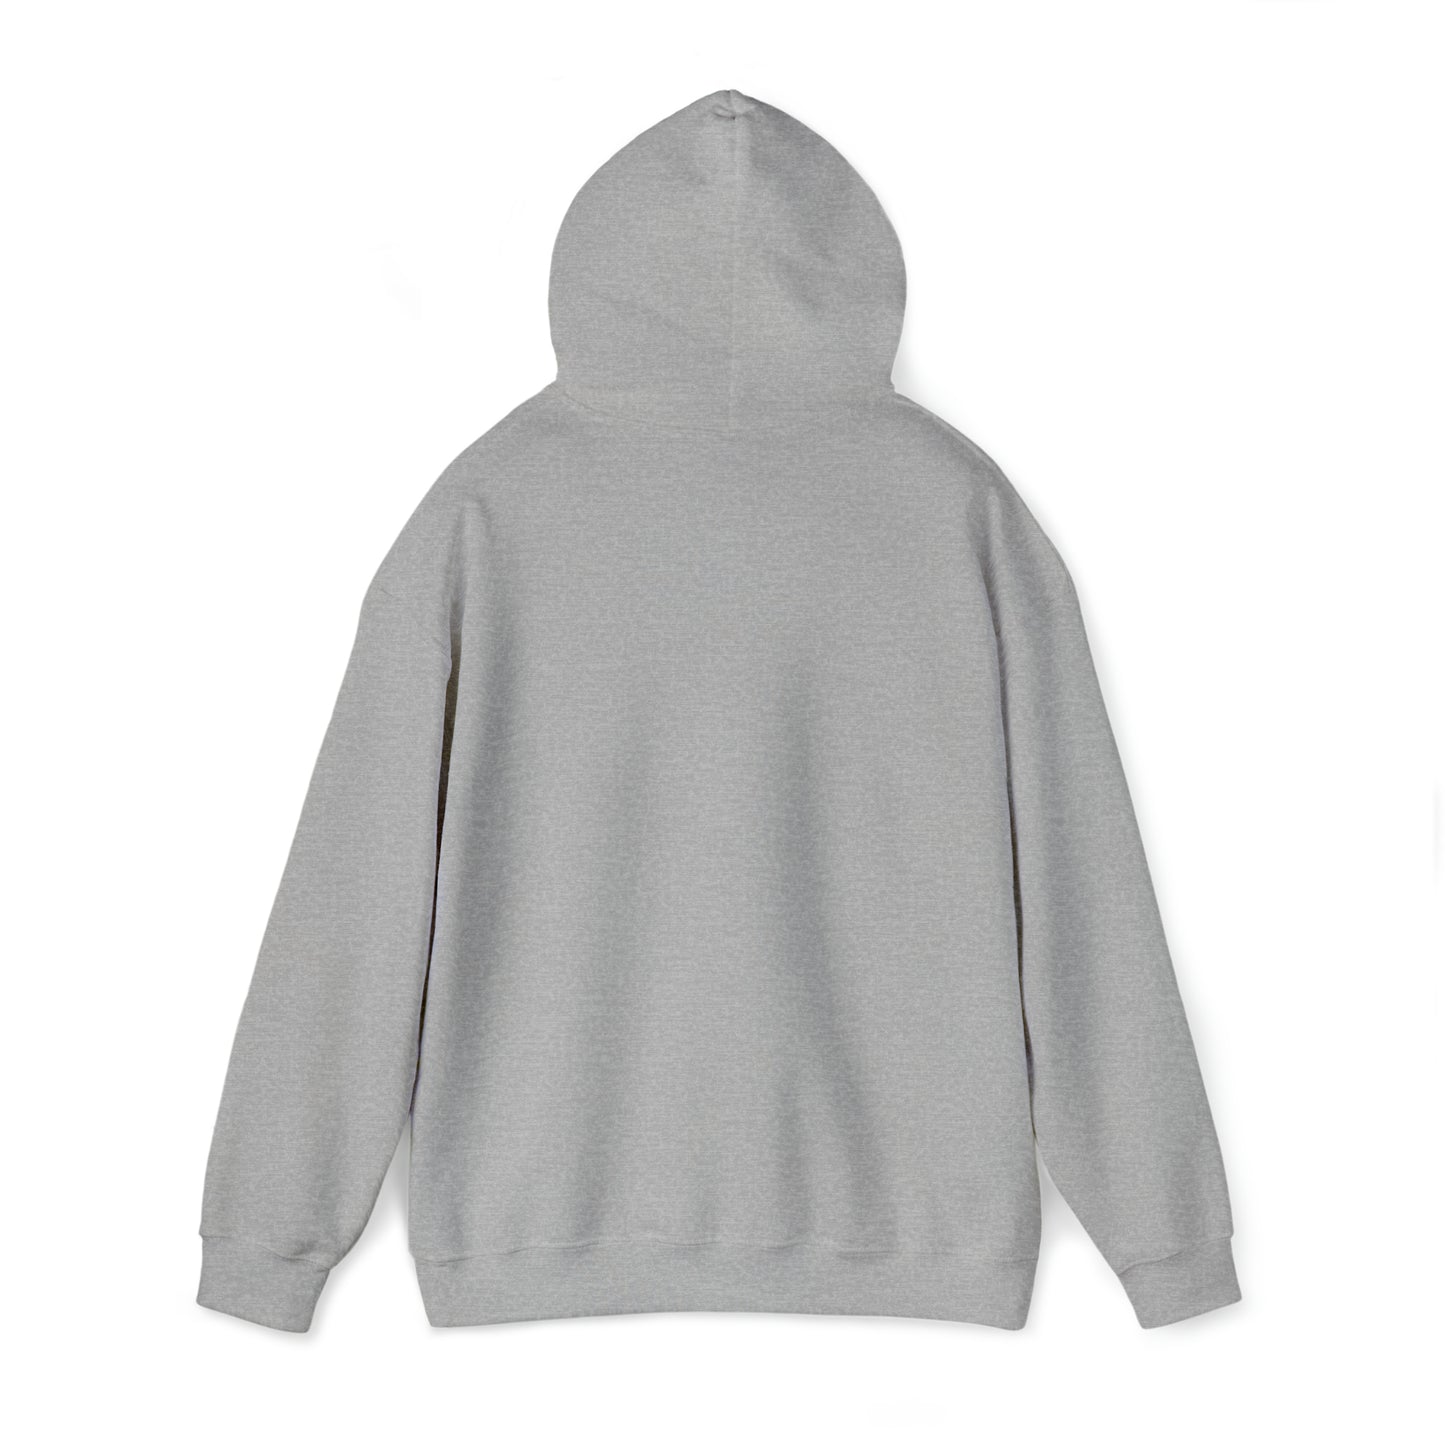 Fox Headphones | Unisex Heavy Blend™ Hooded Sweatshirt